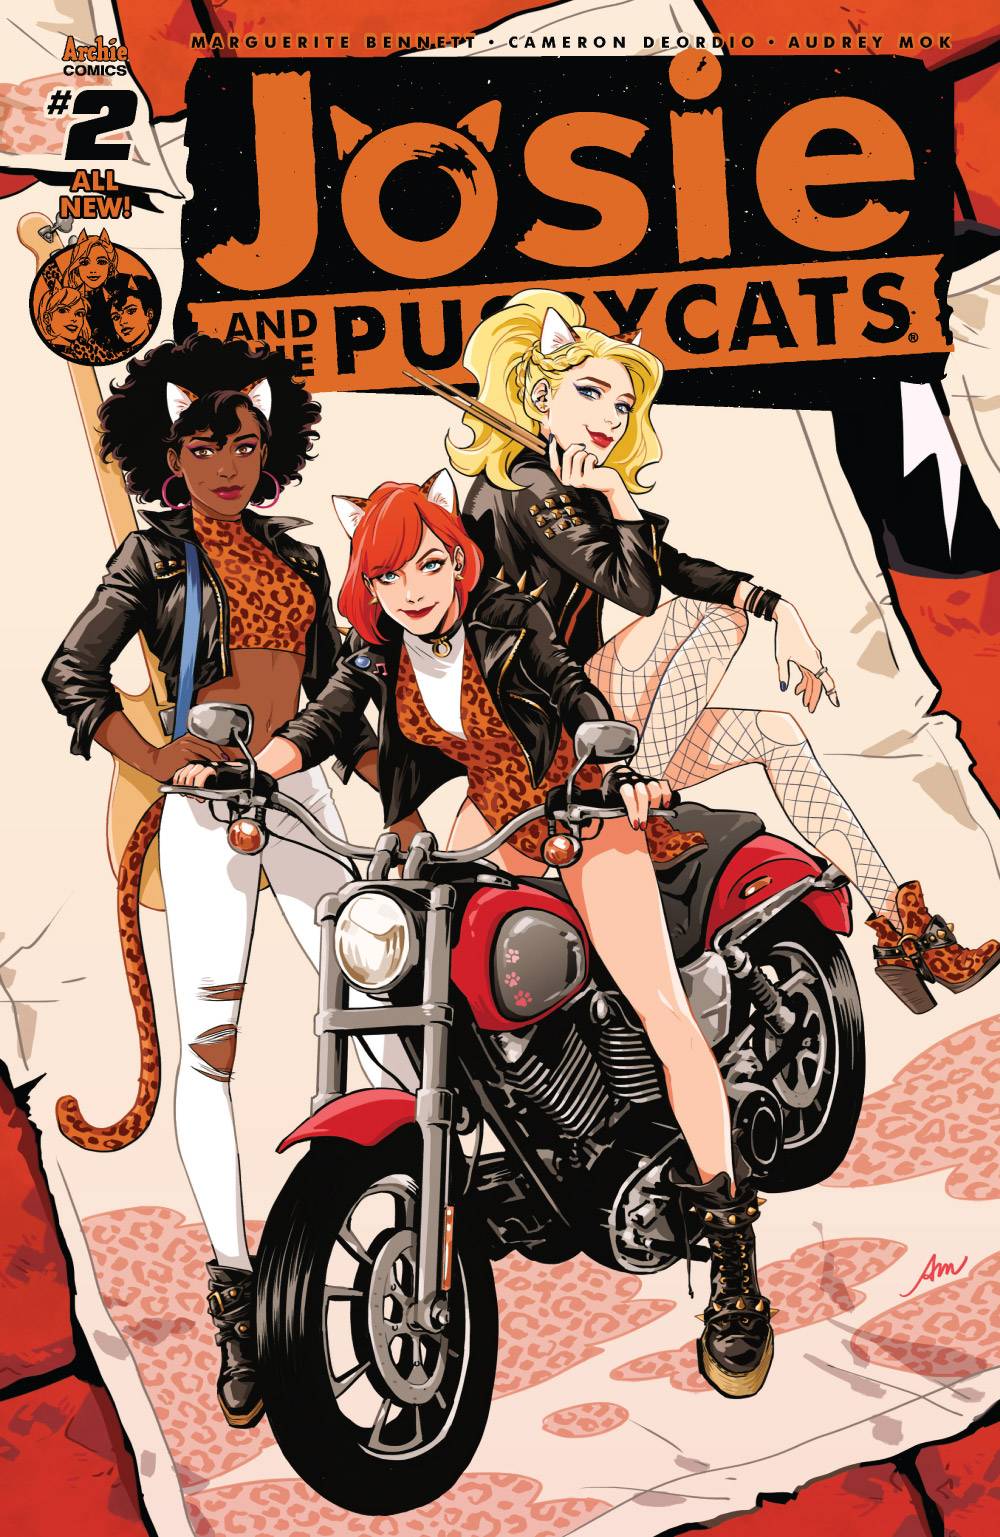 Josie & The Pussycats #2 Cover A Regular Audrey Mok